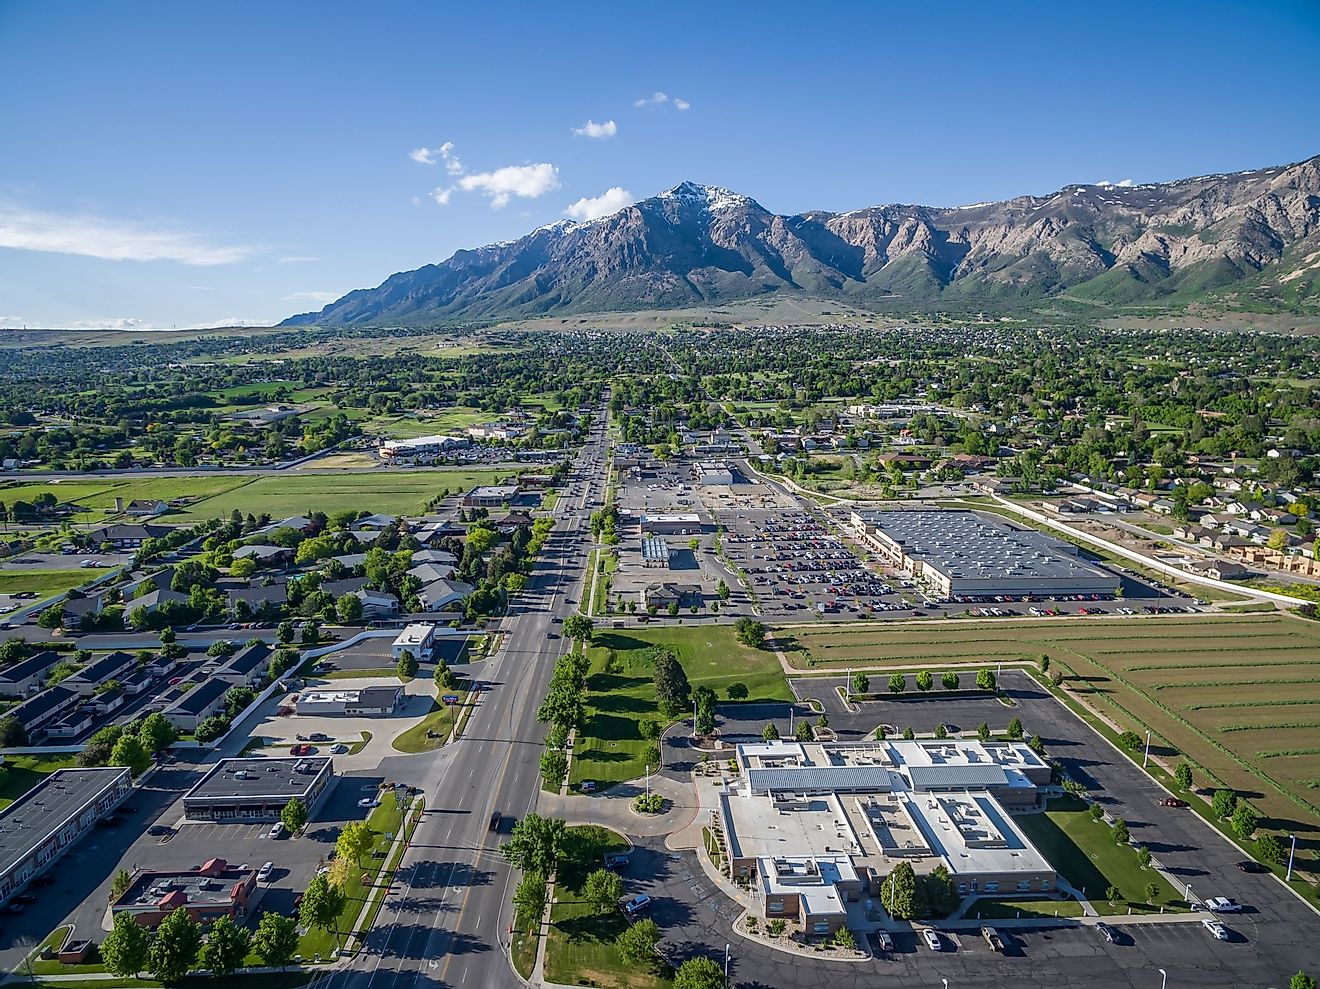 Aerial view of Ogden, Utah